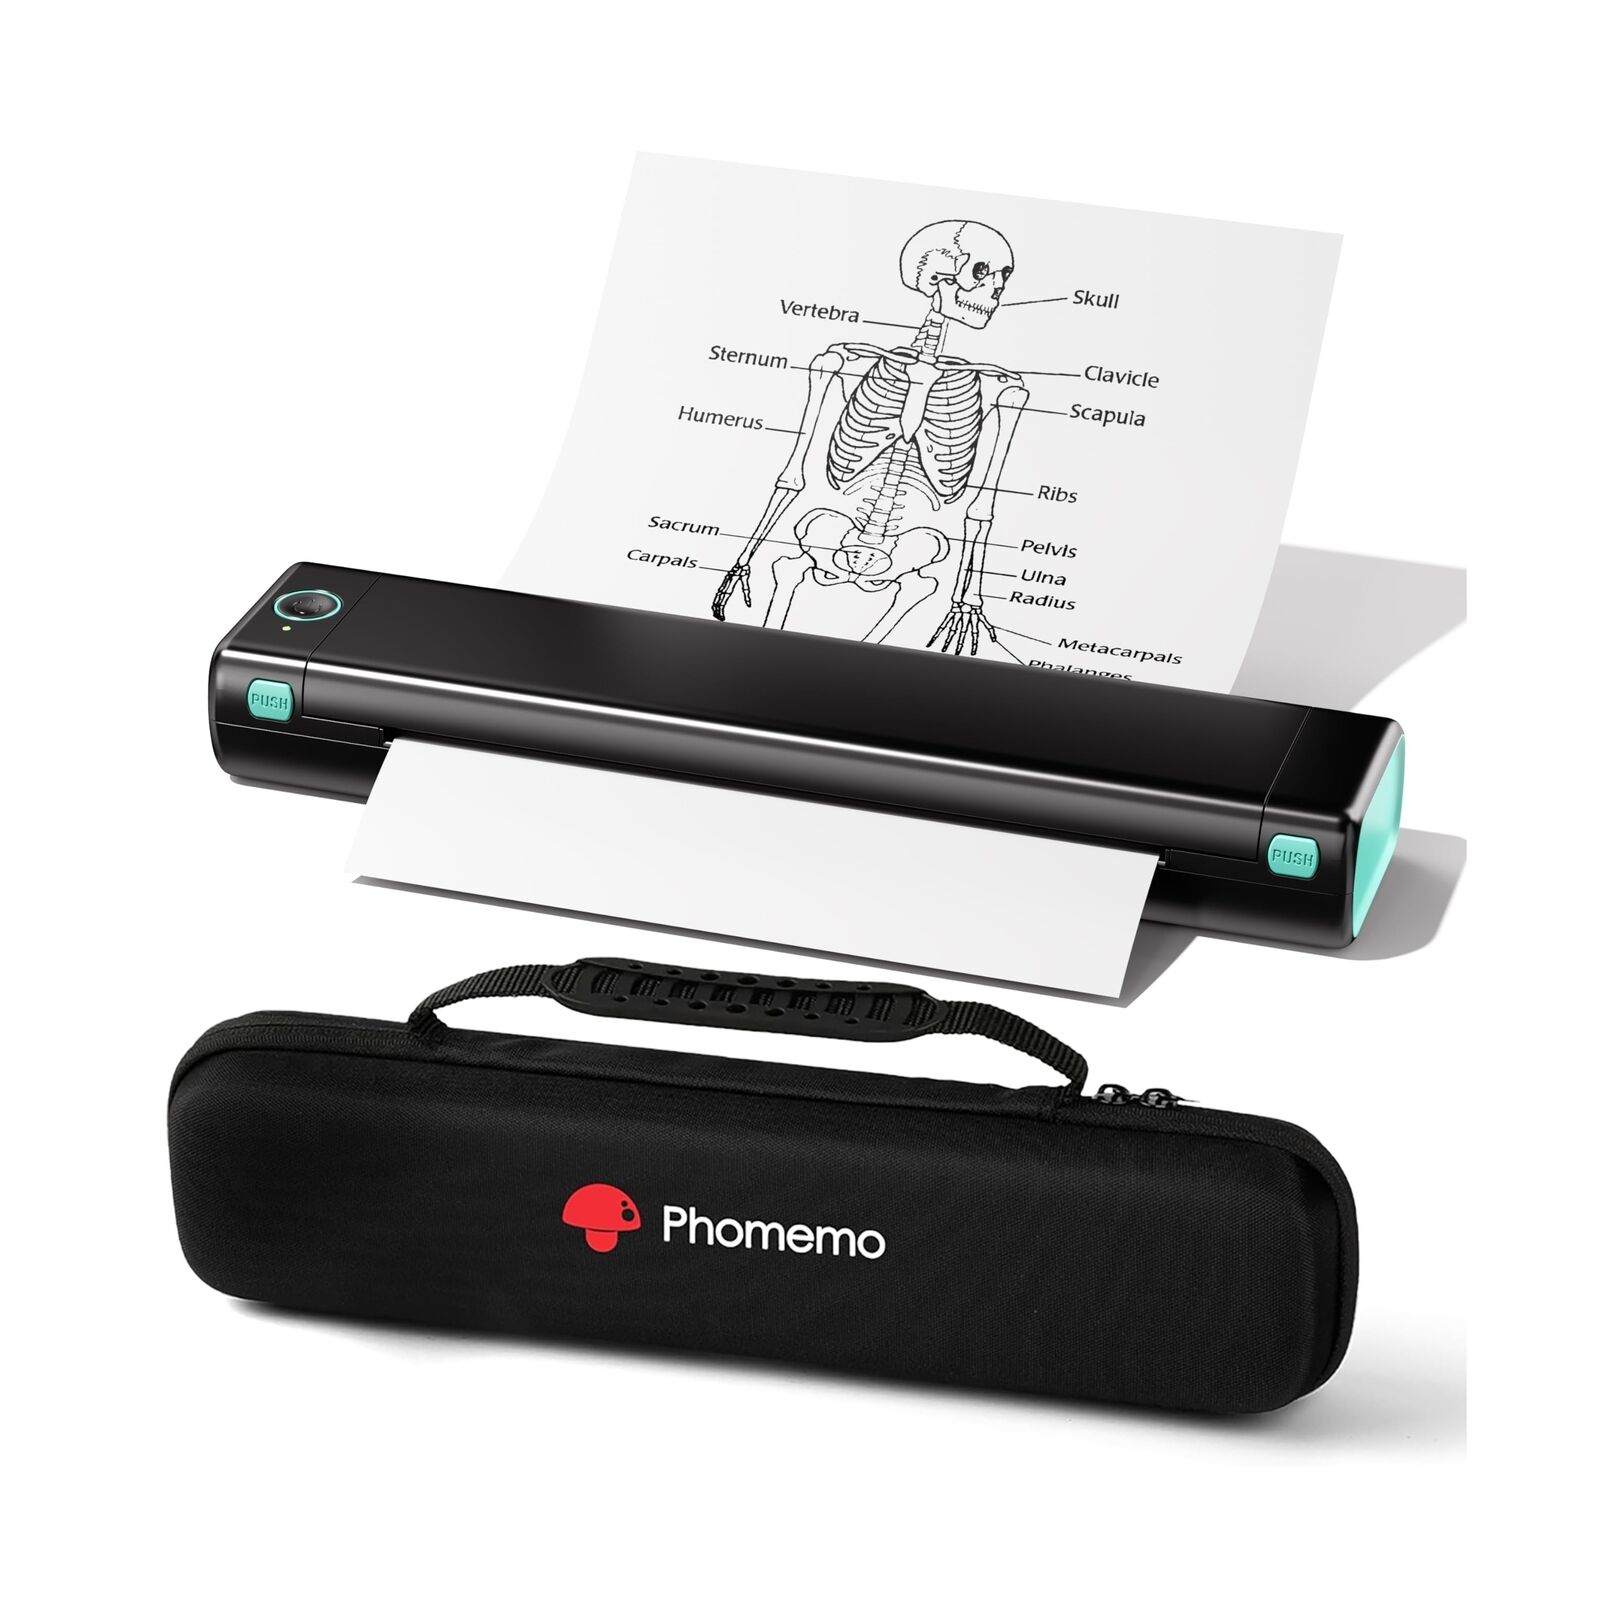 Phomemo Portable Thermal Printer - [Upgrade] Portable Printer Wireless for Tr...